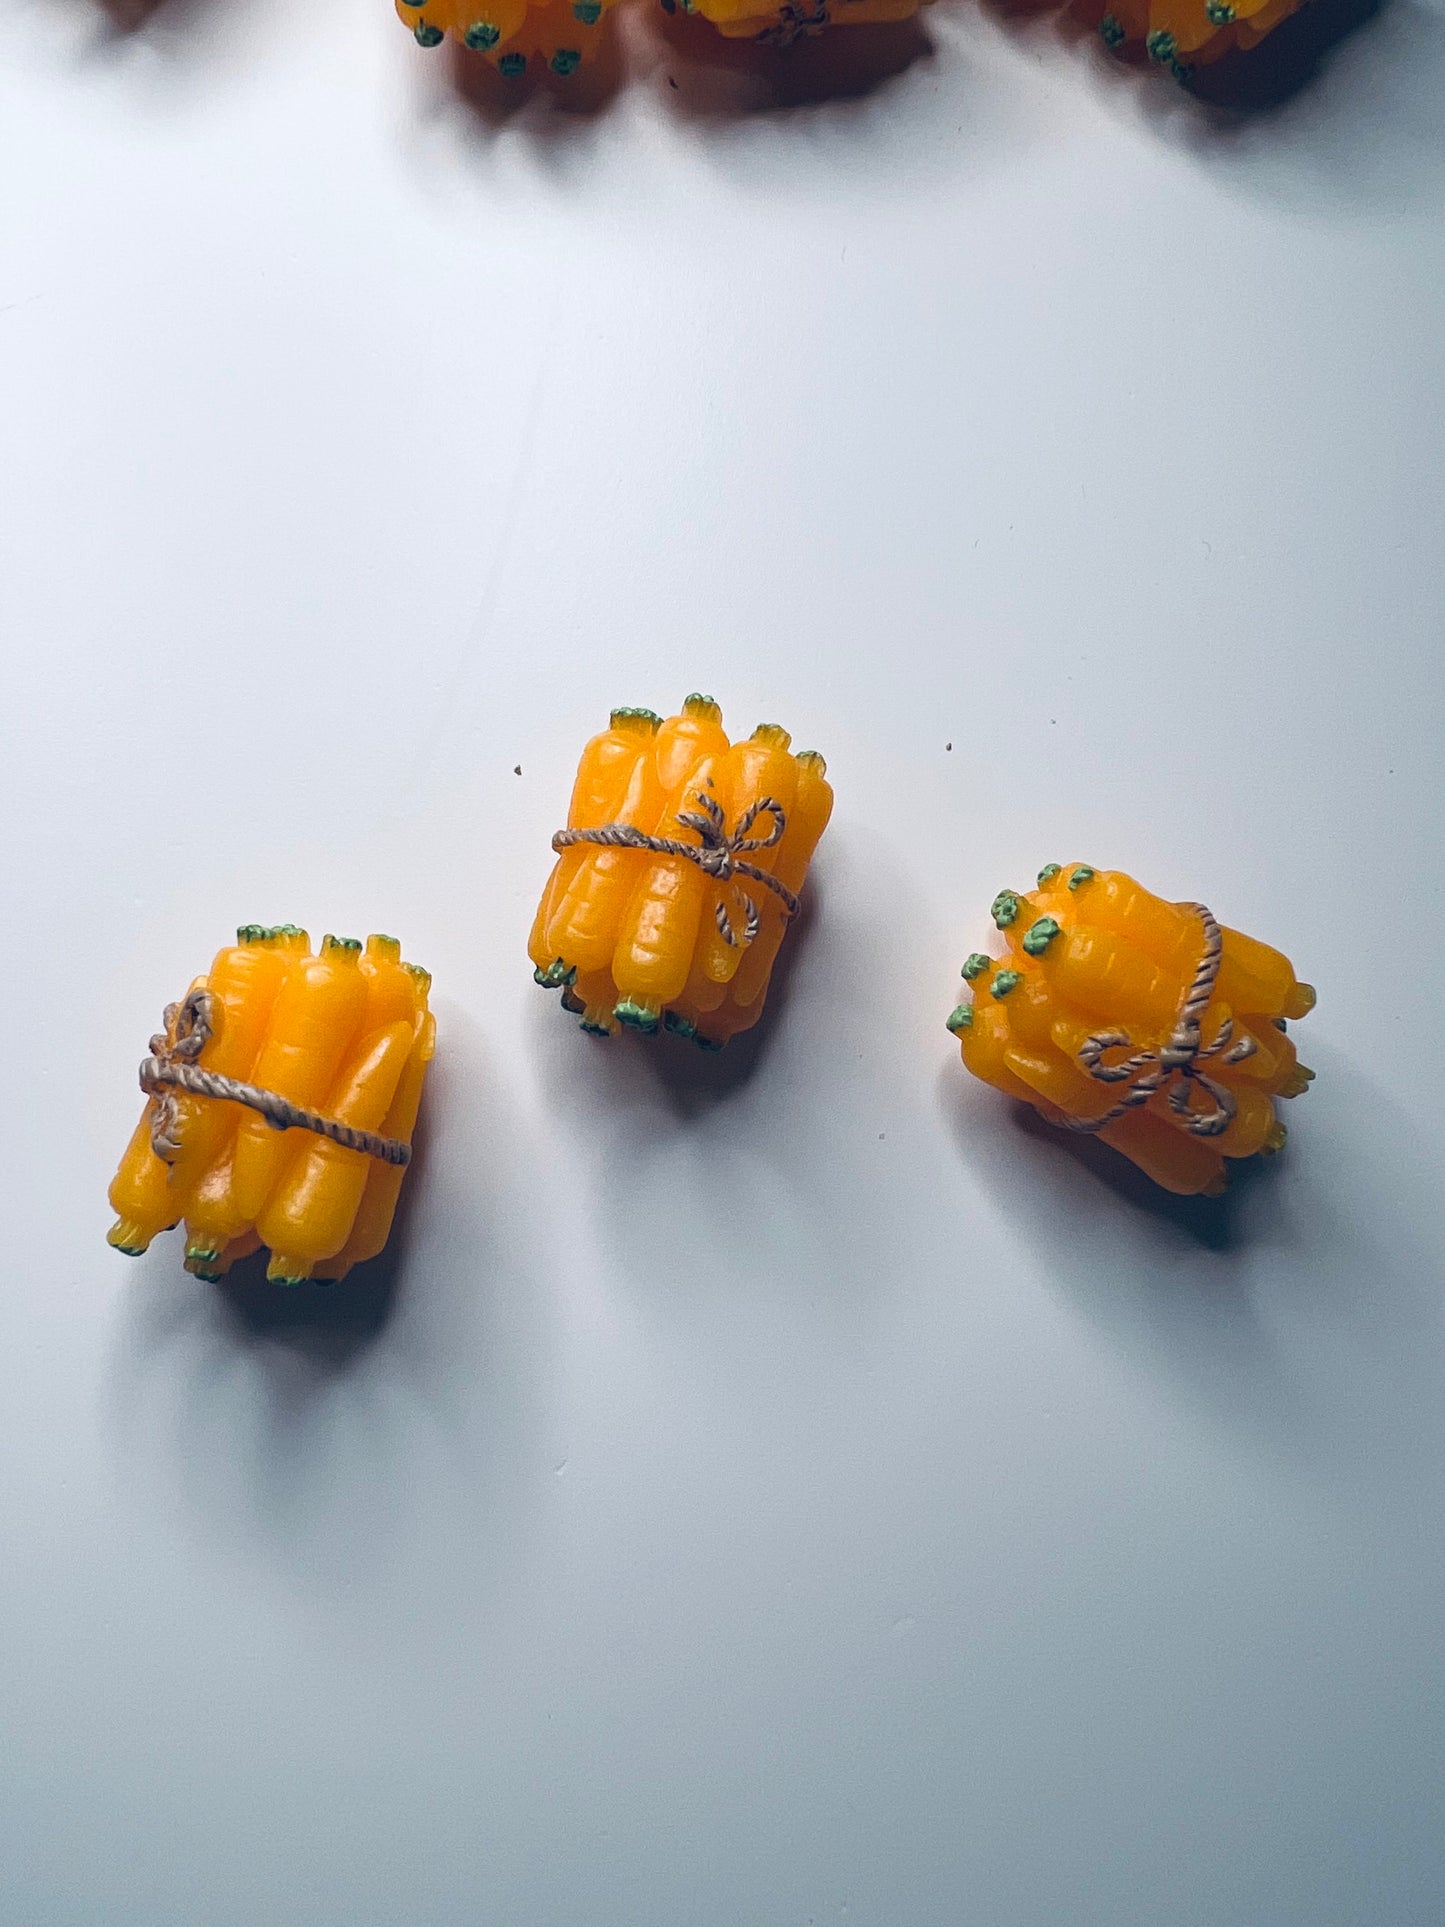 Objet miniature de paquet de carottes - Mini carottes - Bibelots - Bibelots sur le thème du jardin - Mini objet végétal - Mini Carotte Trinket Doodads